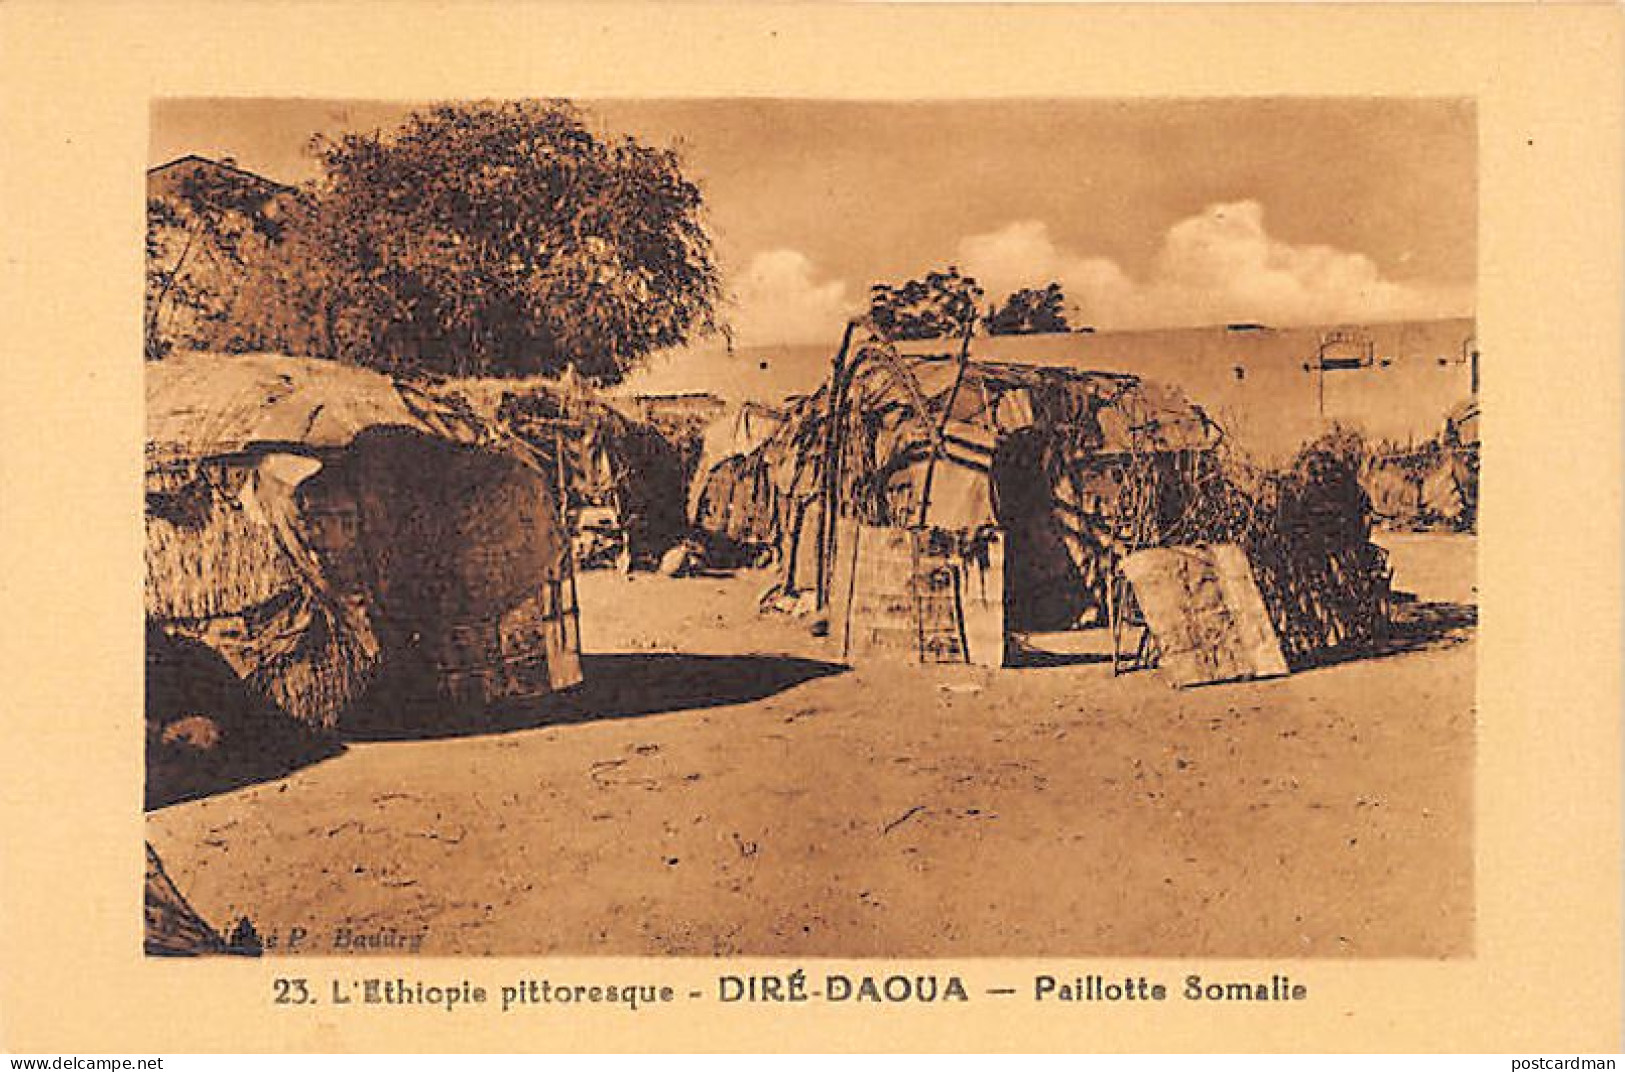 Ethiopia - DIRE DAWA - Somali Straw Hut - Publ. Printing Works Of The Dire Dawa Catholic Mission - Photographer P. Baudr - Ethiopia